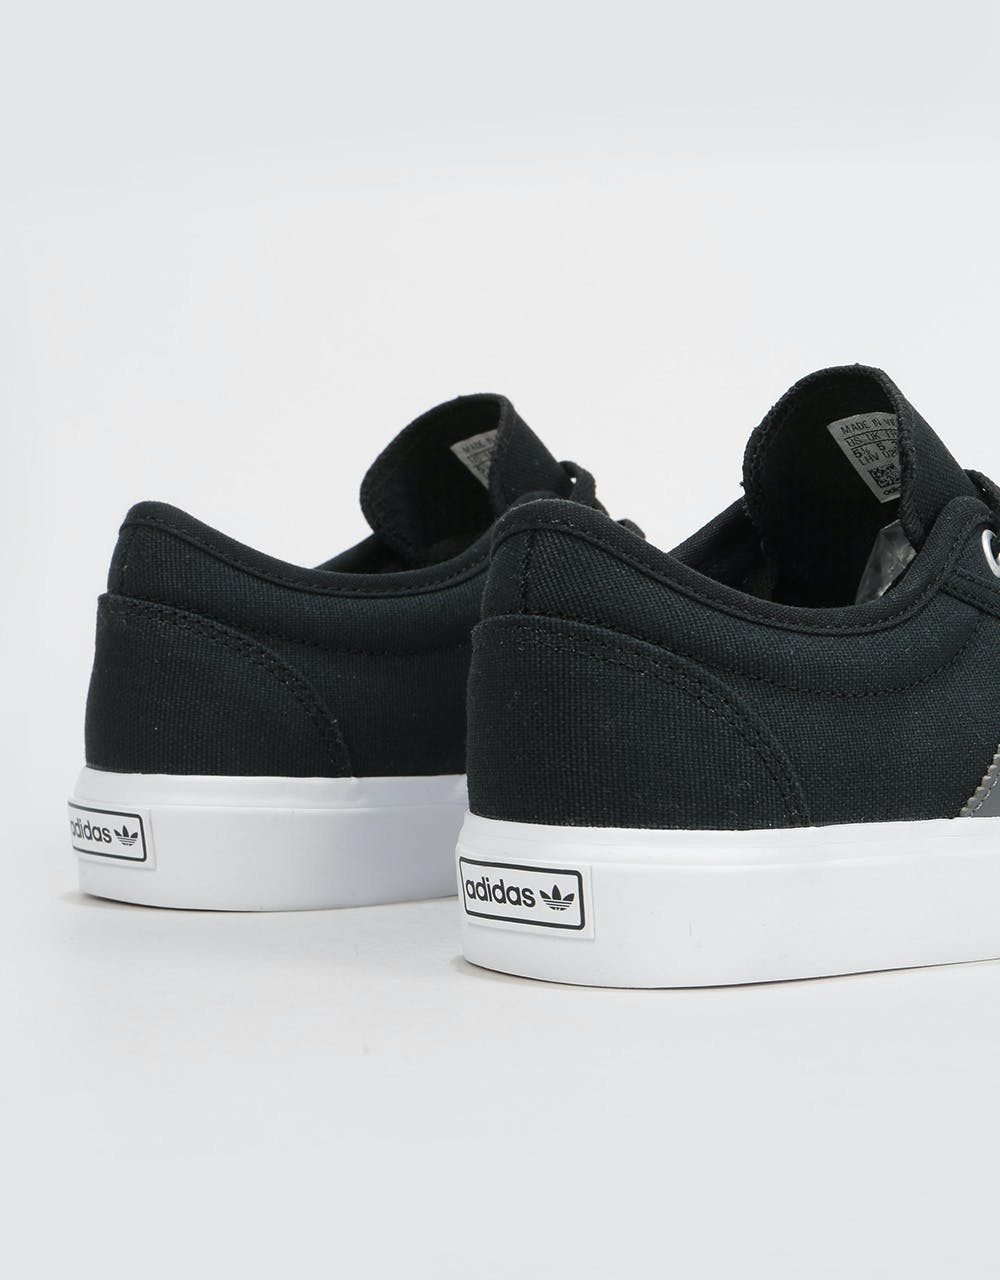 Adidas Adi-Ease Kids Skate Shoes - Black/Grey/White